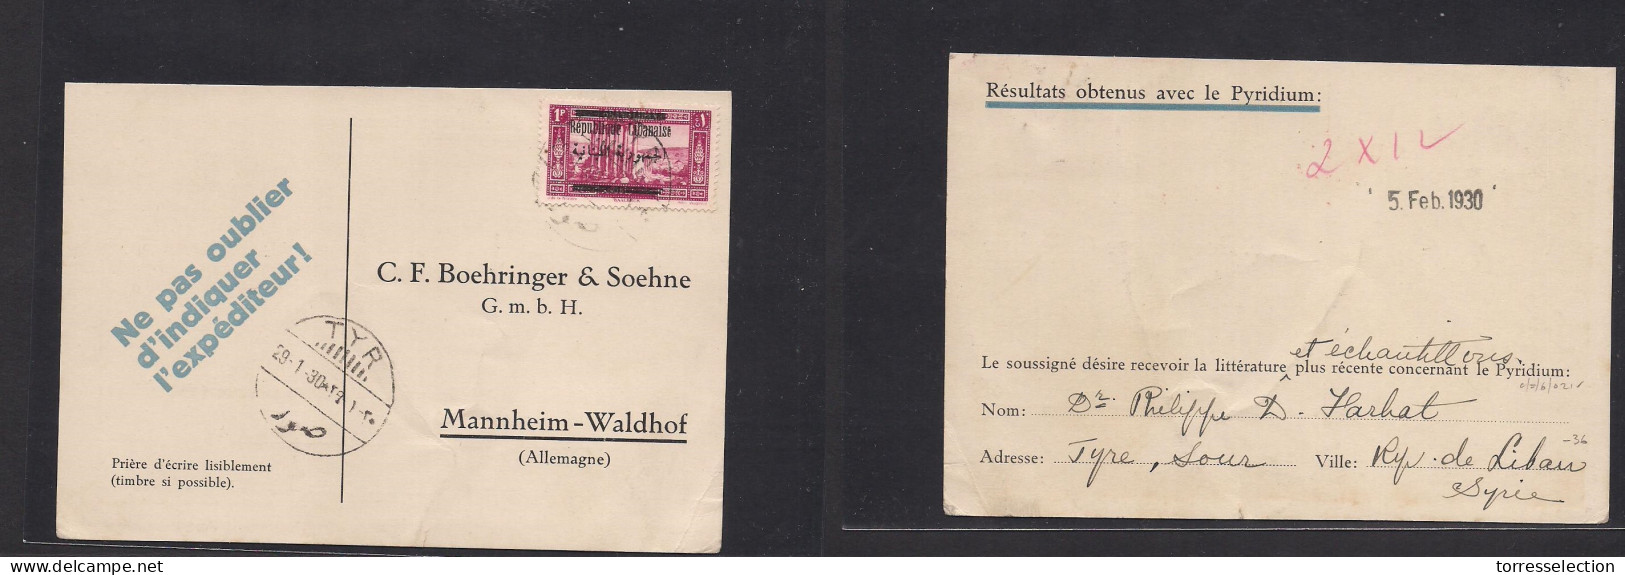 LEBANON. 1930 (29 Jan) TYR - Germany, Mannheim. Fkd Card, Cds. VF. - Lebanon